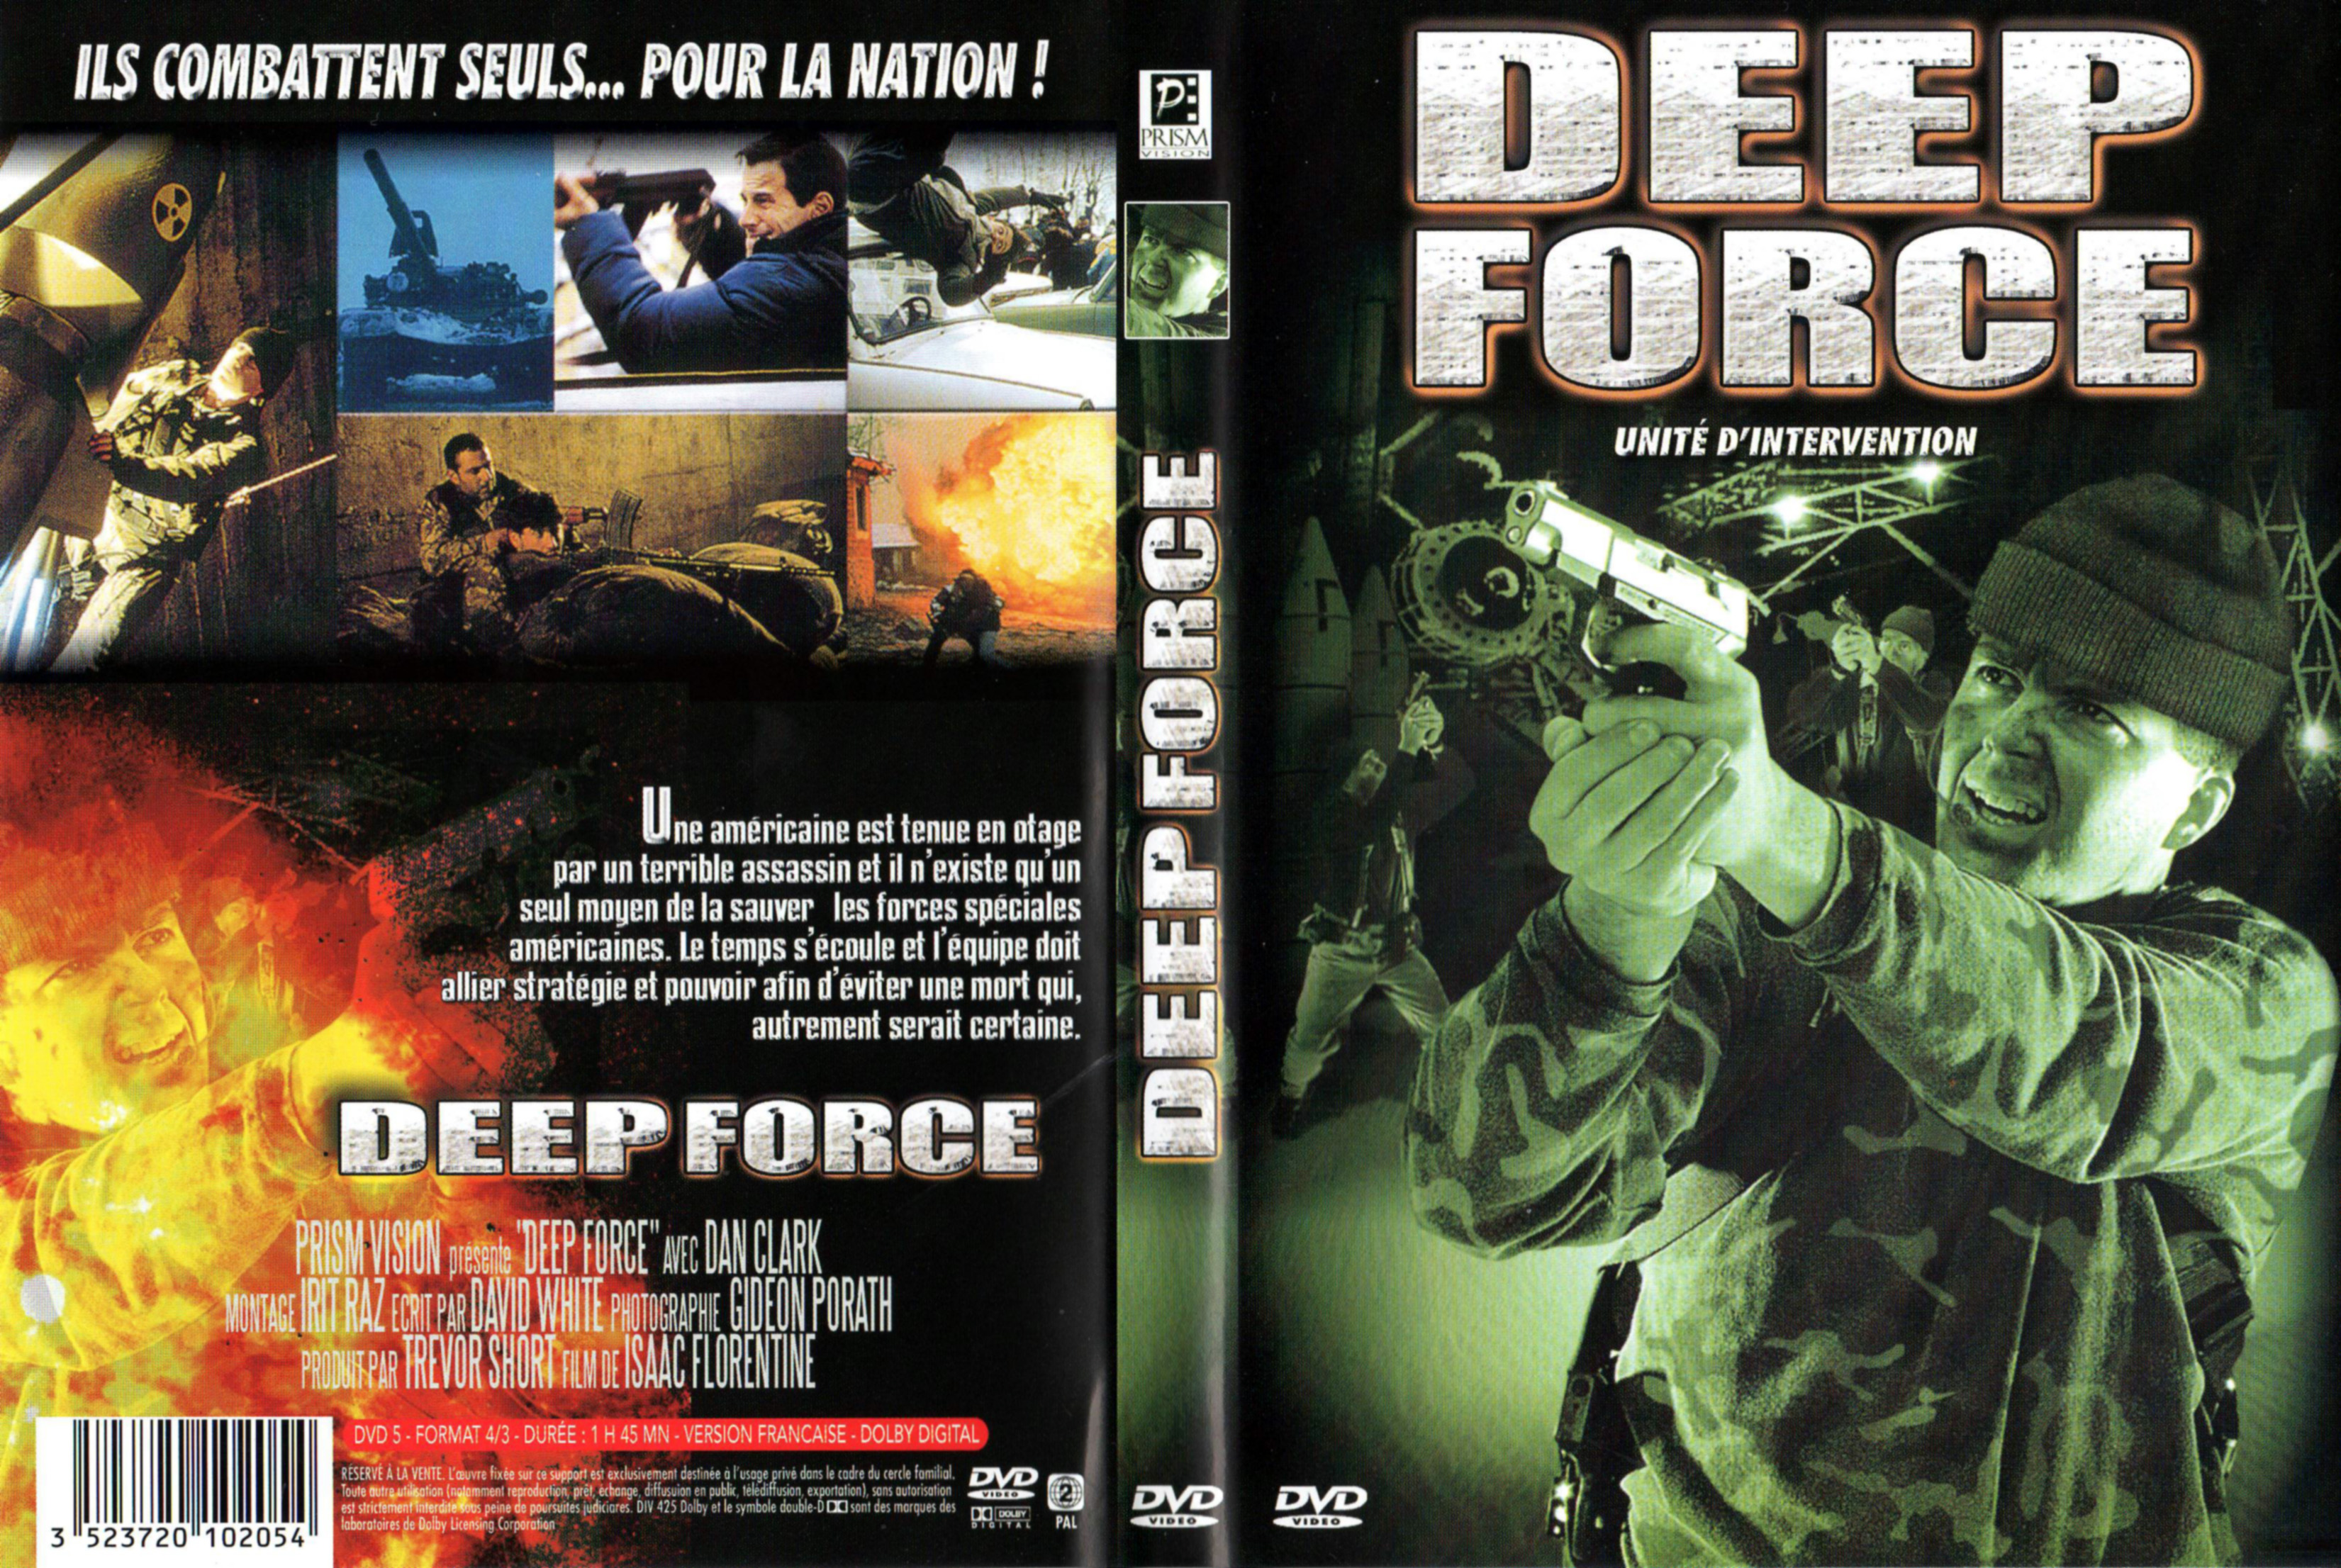 Jaquette DVD Deep force